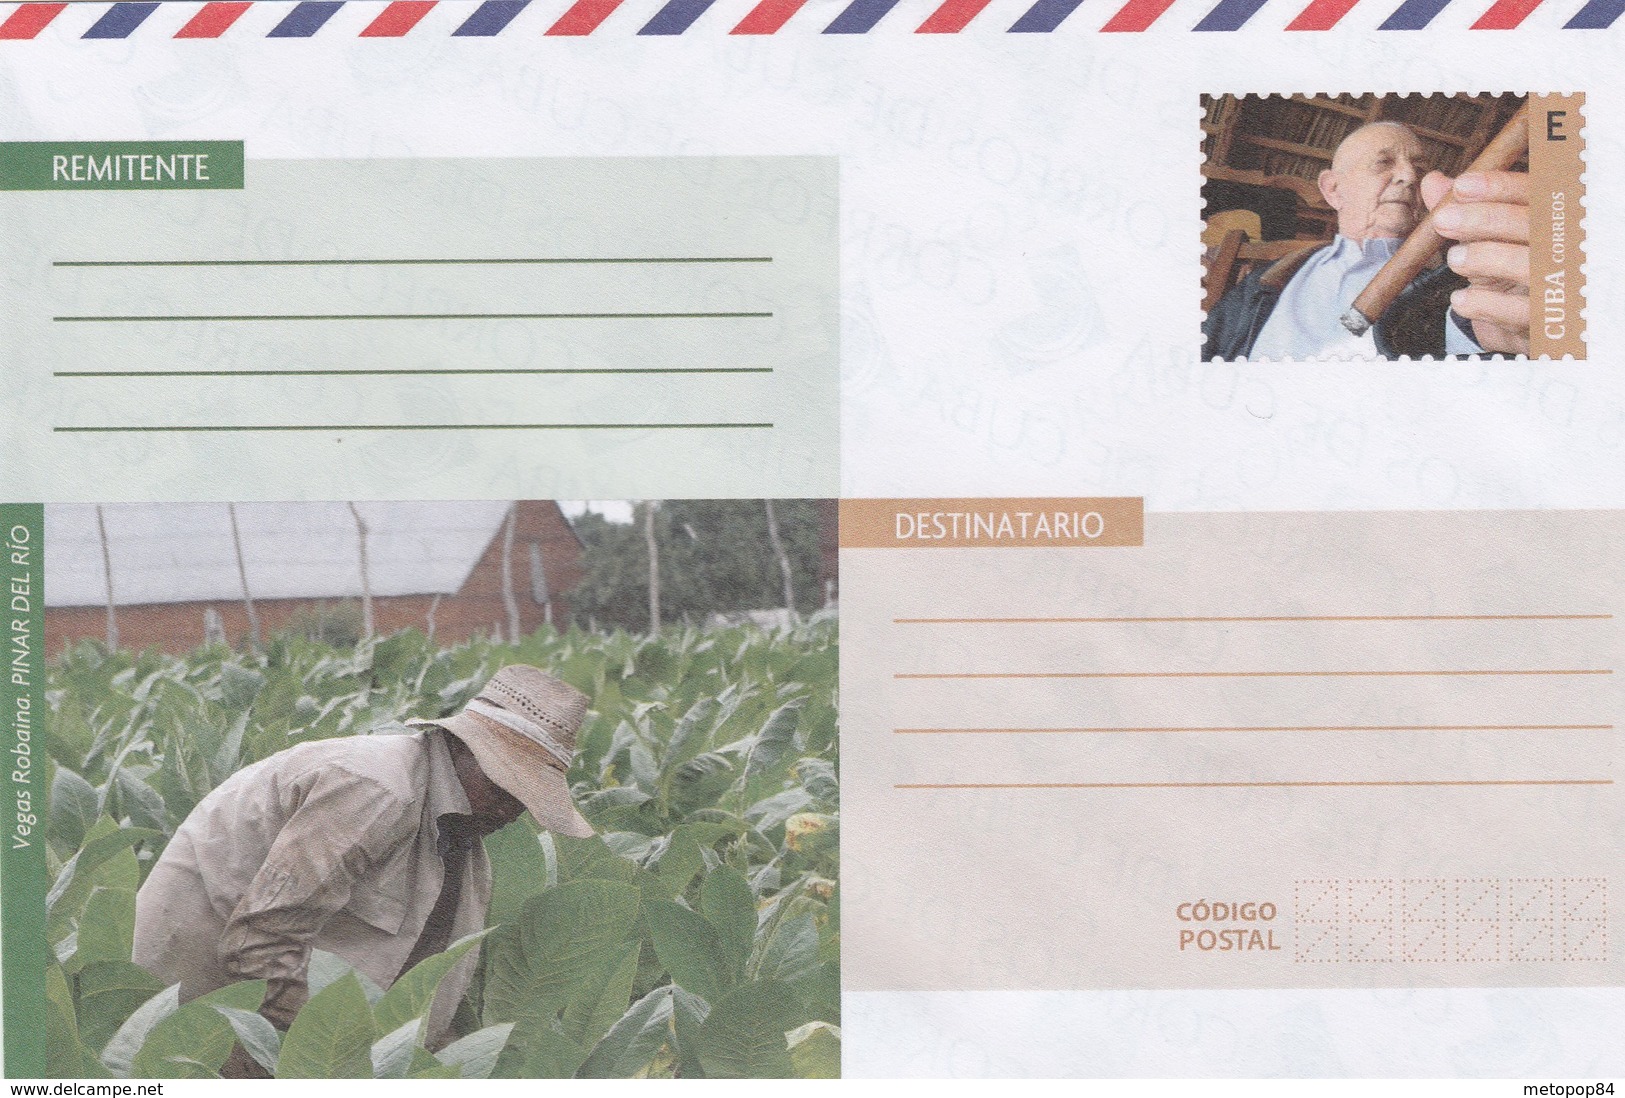 Cuba 2018 Postal Stationary - Covers & Documents